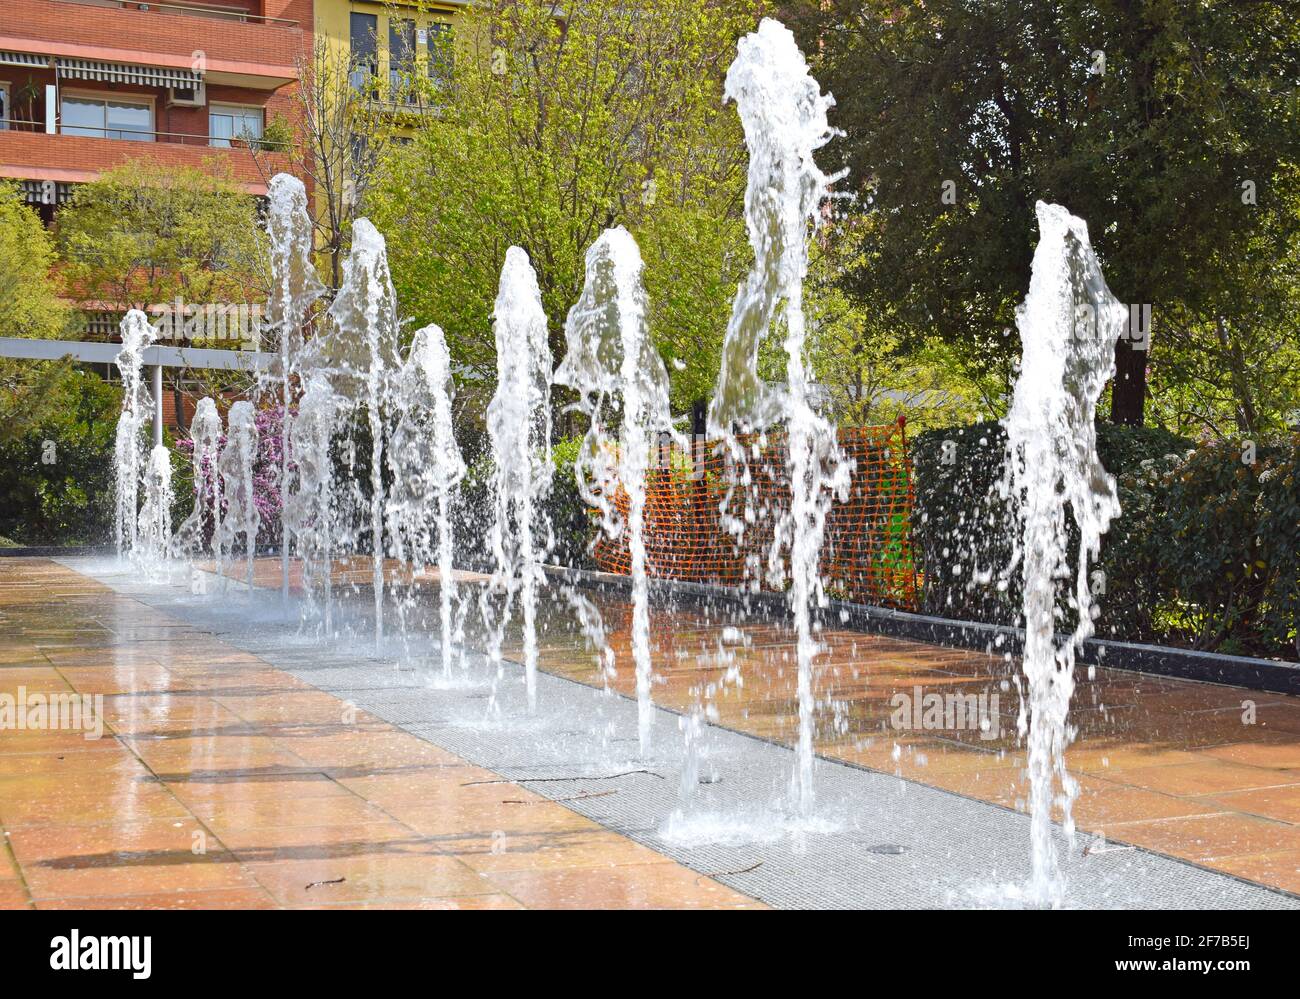 Water fountain in public park, Barcelona Spain Stock Photo